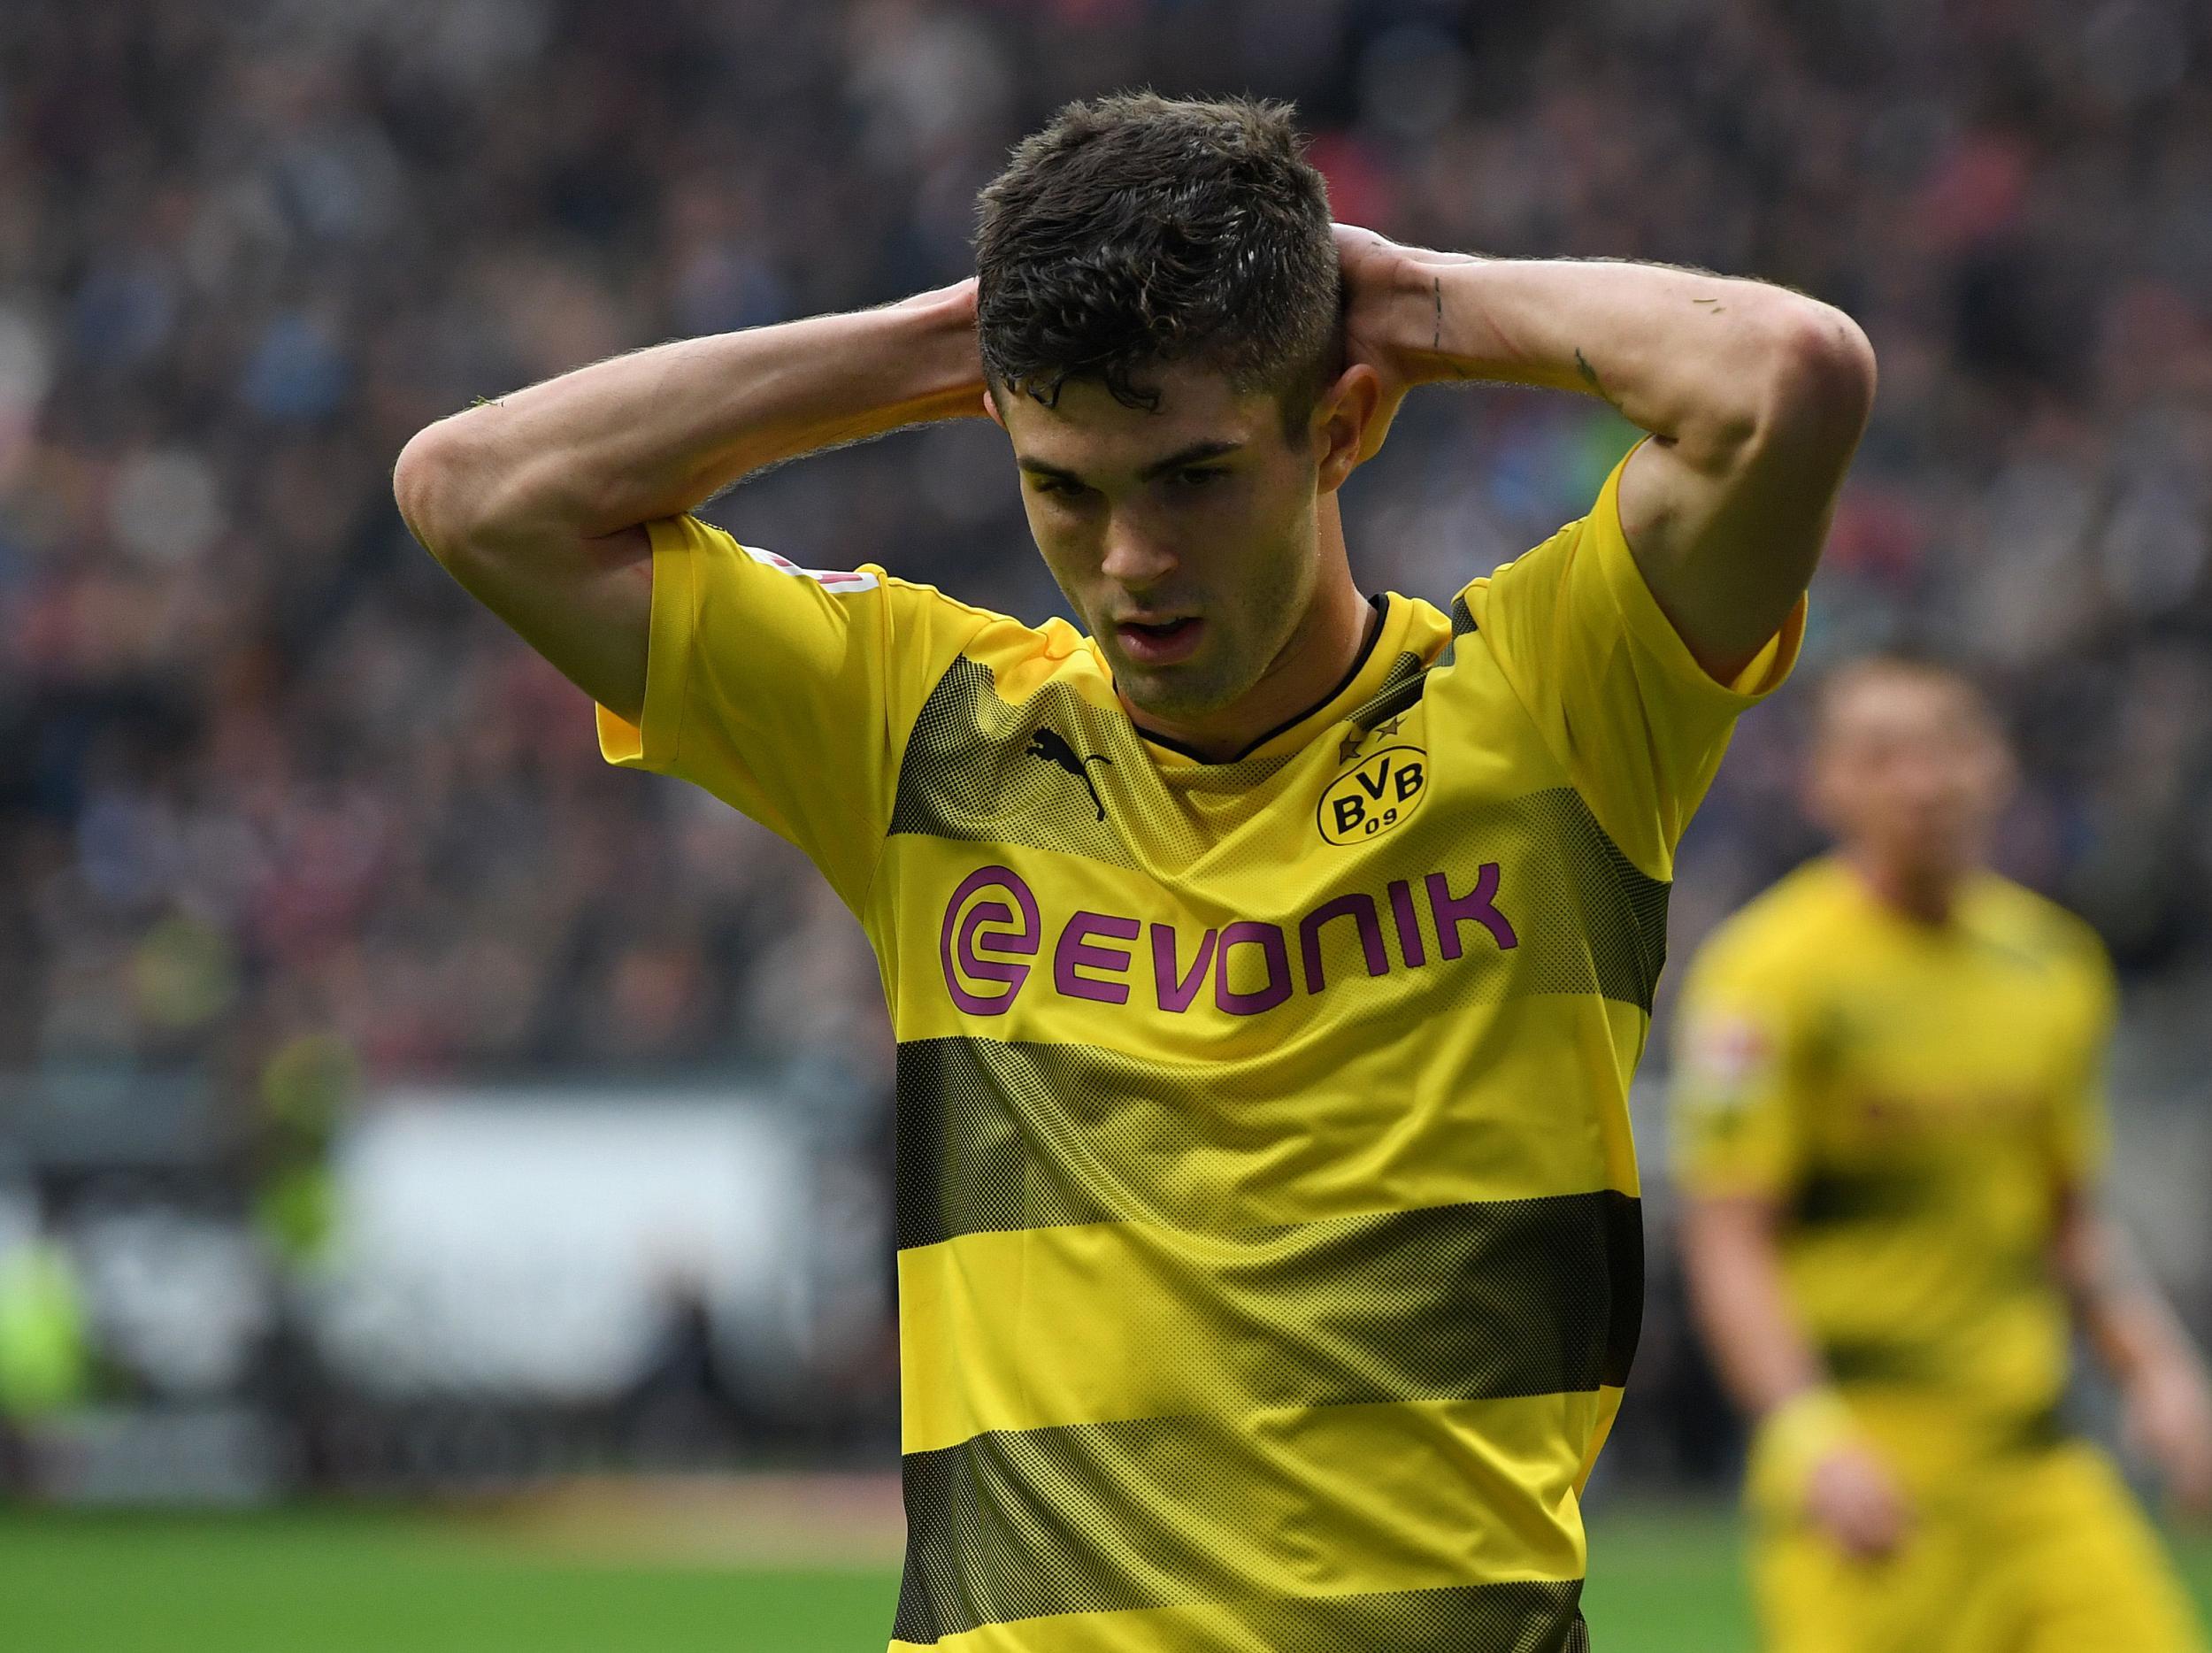 Dortmund have struggled this season